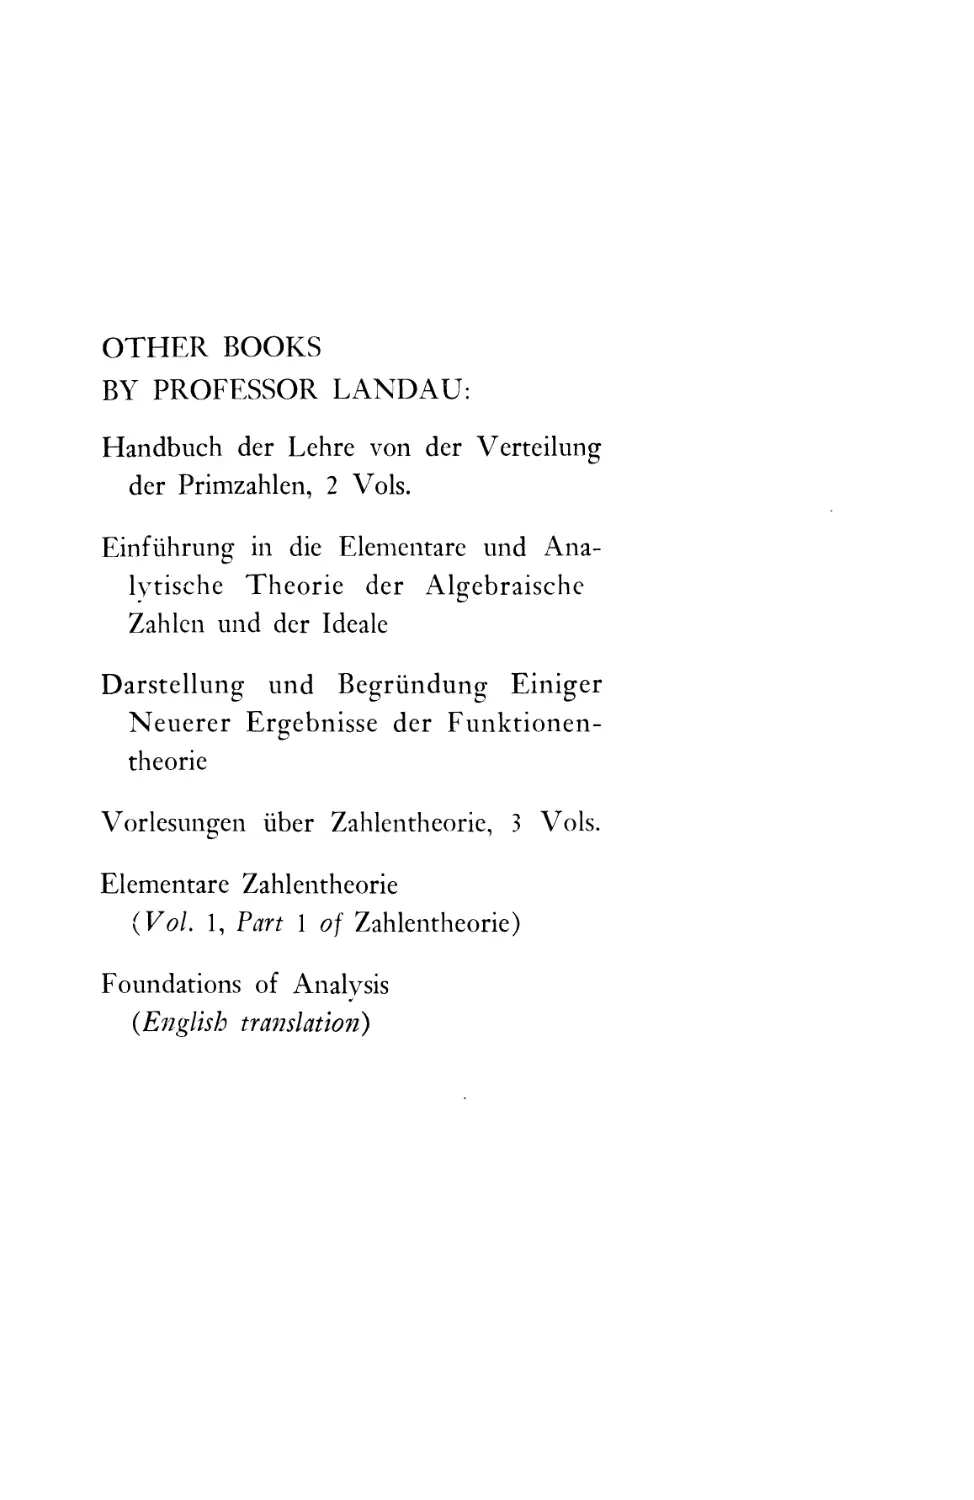 Other books by Prof. Landau